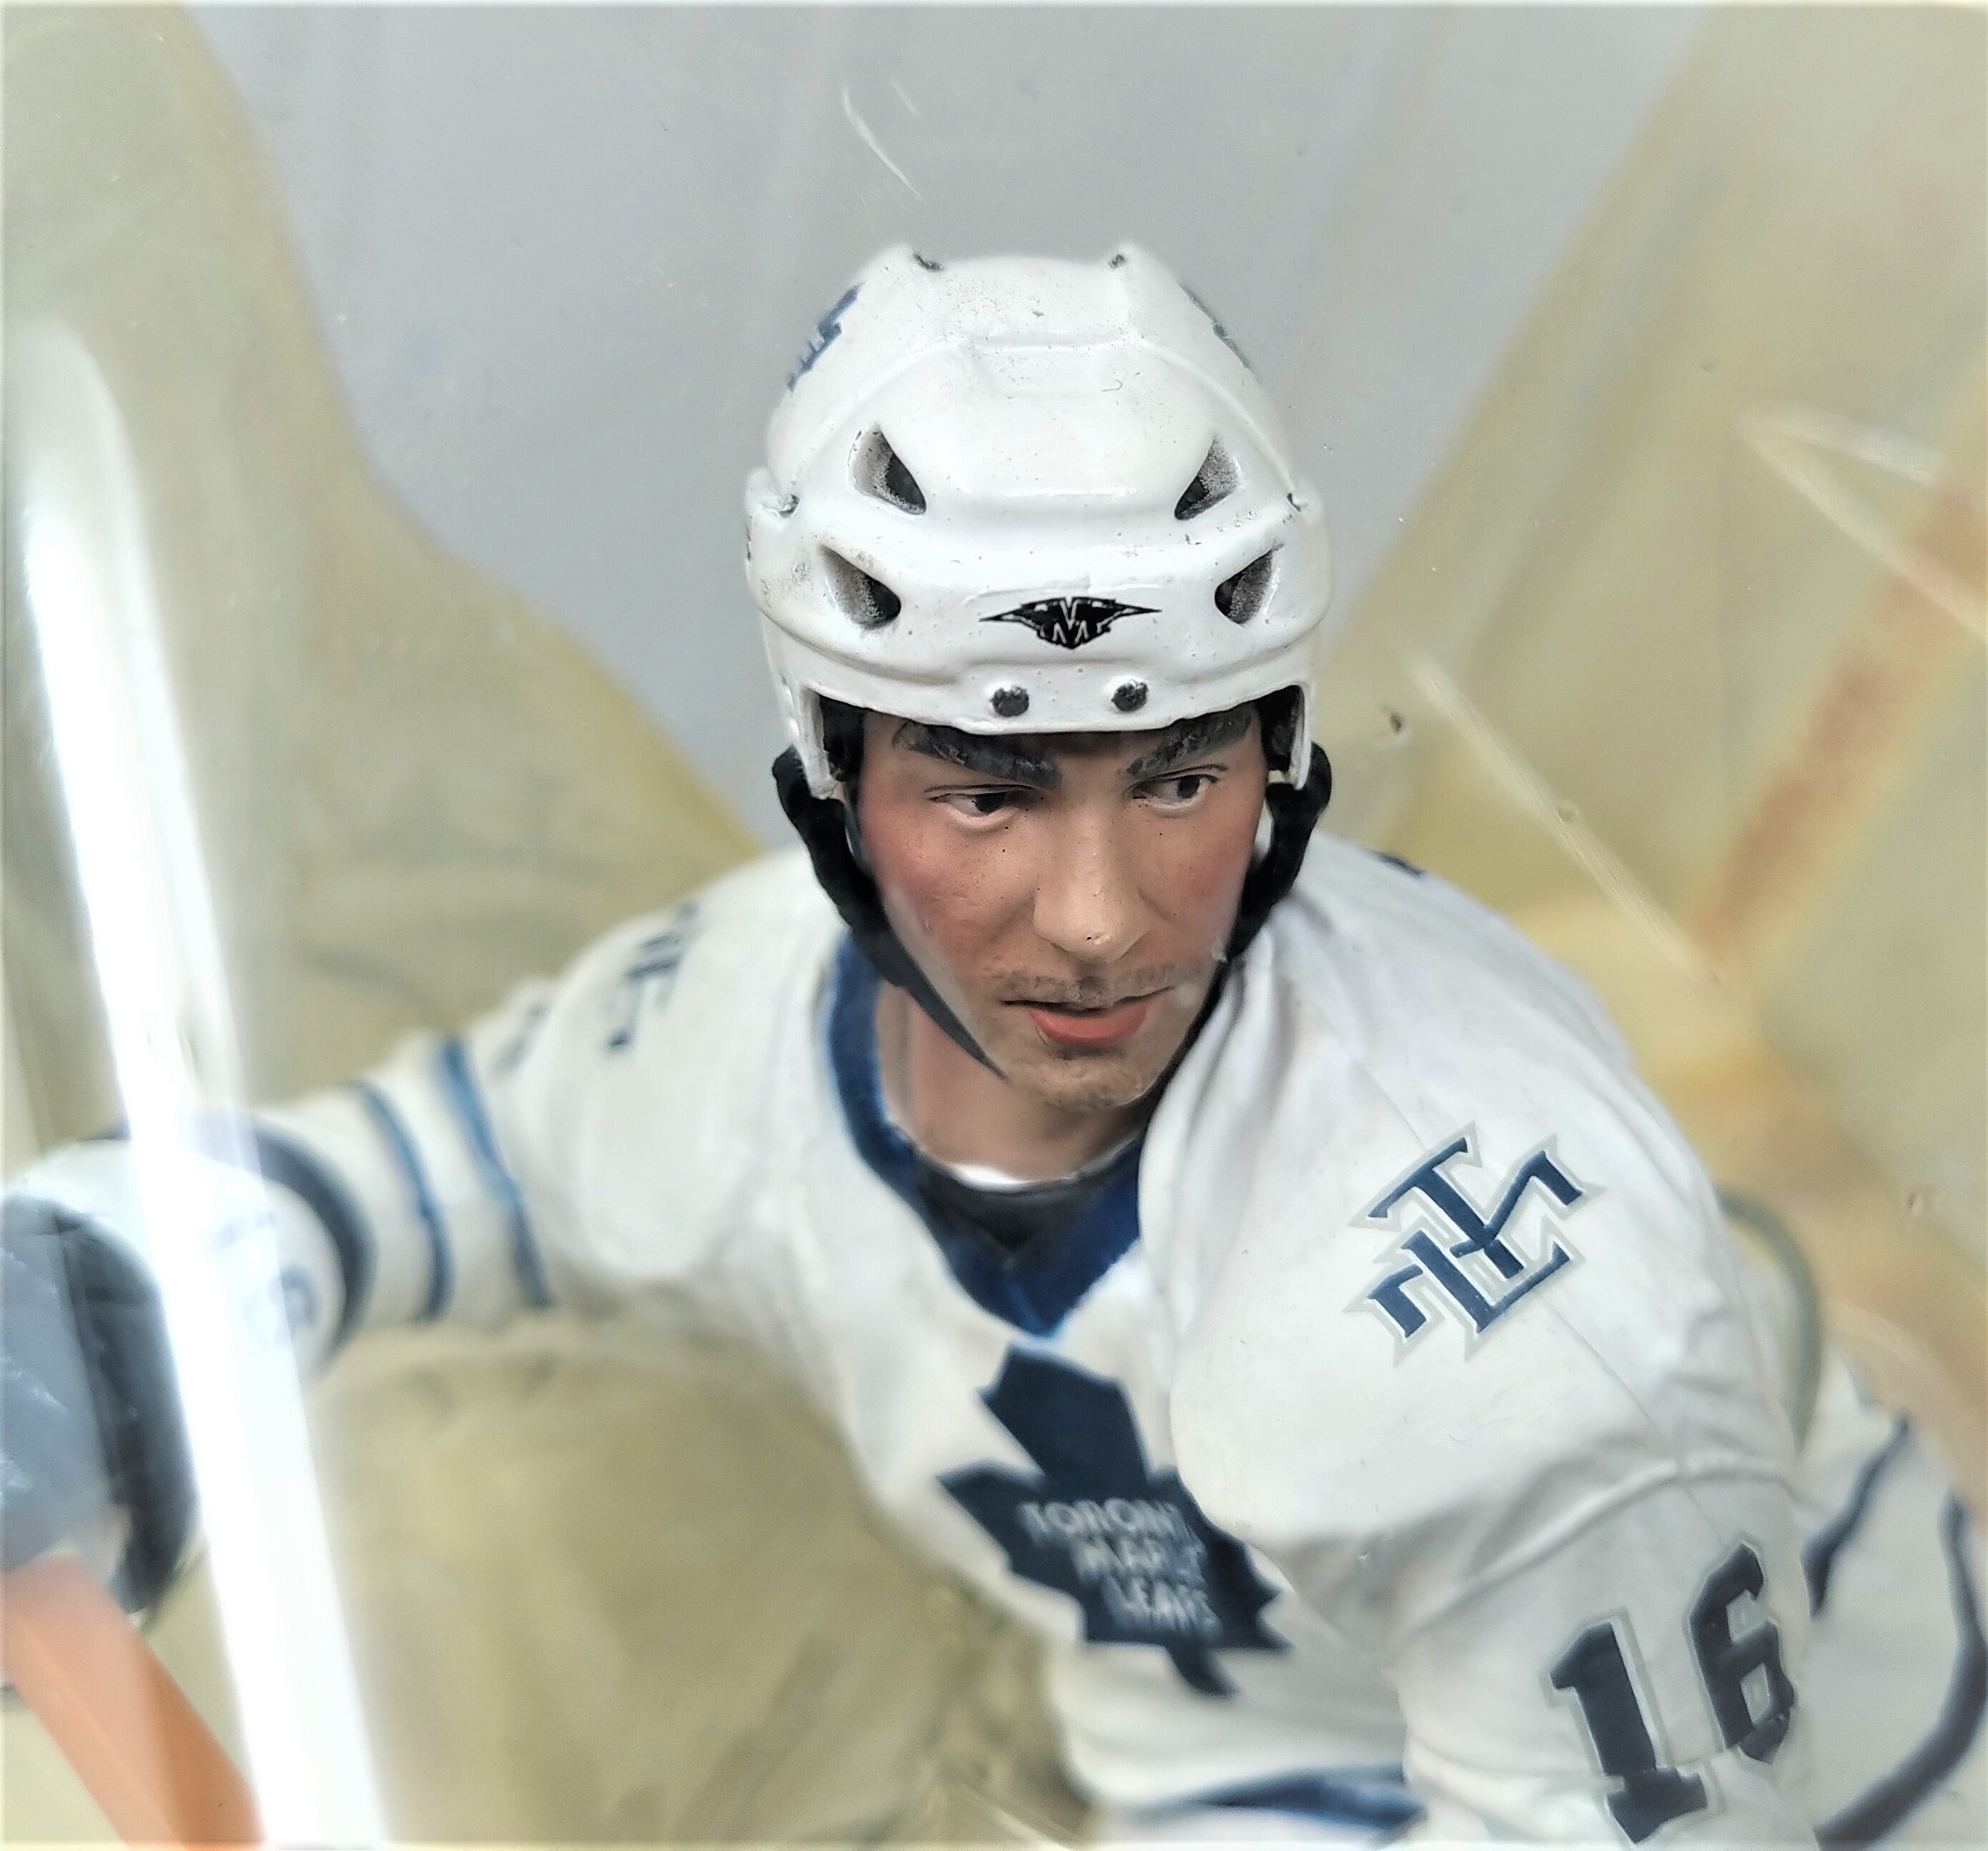 McFarlane Sportpicks Darcy Tucker Toronto Maple Leafs Series 15 6" Player Figurine - Miraj Trading